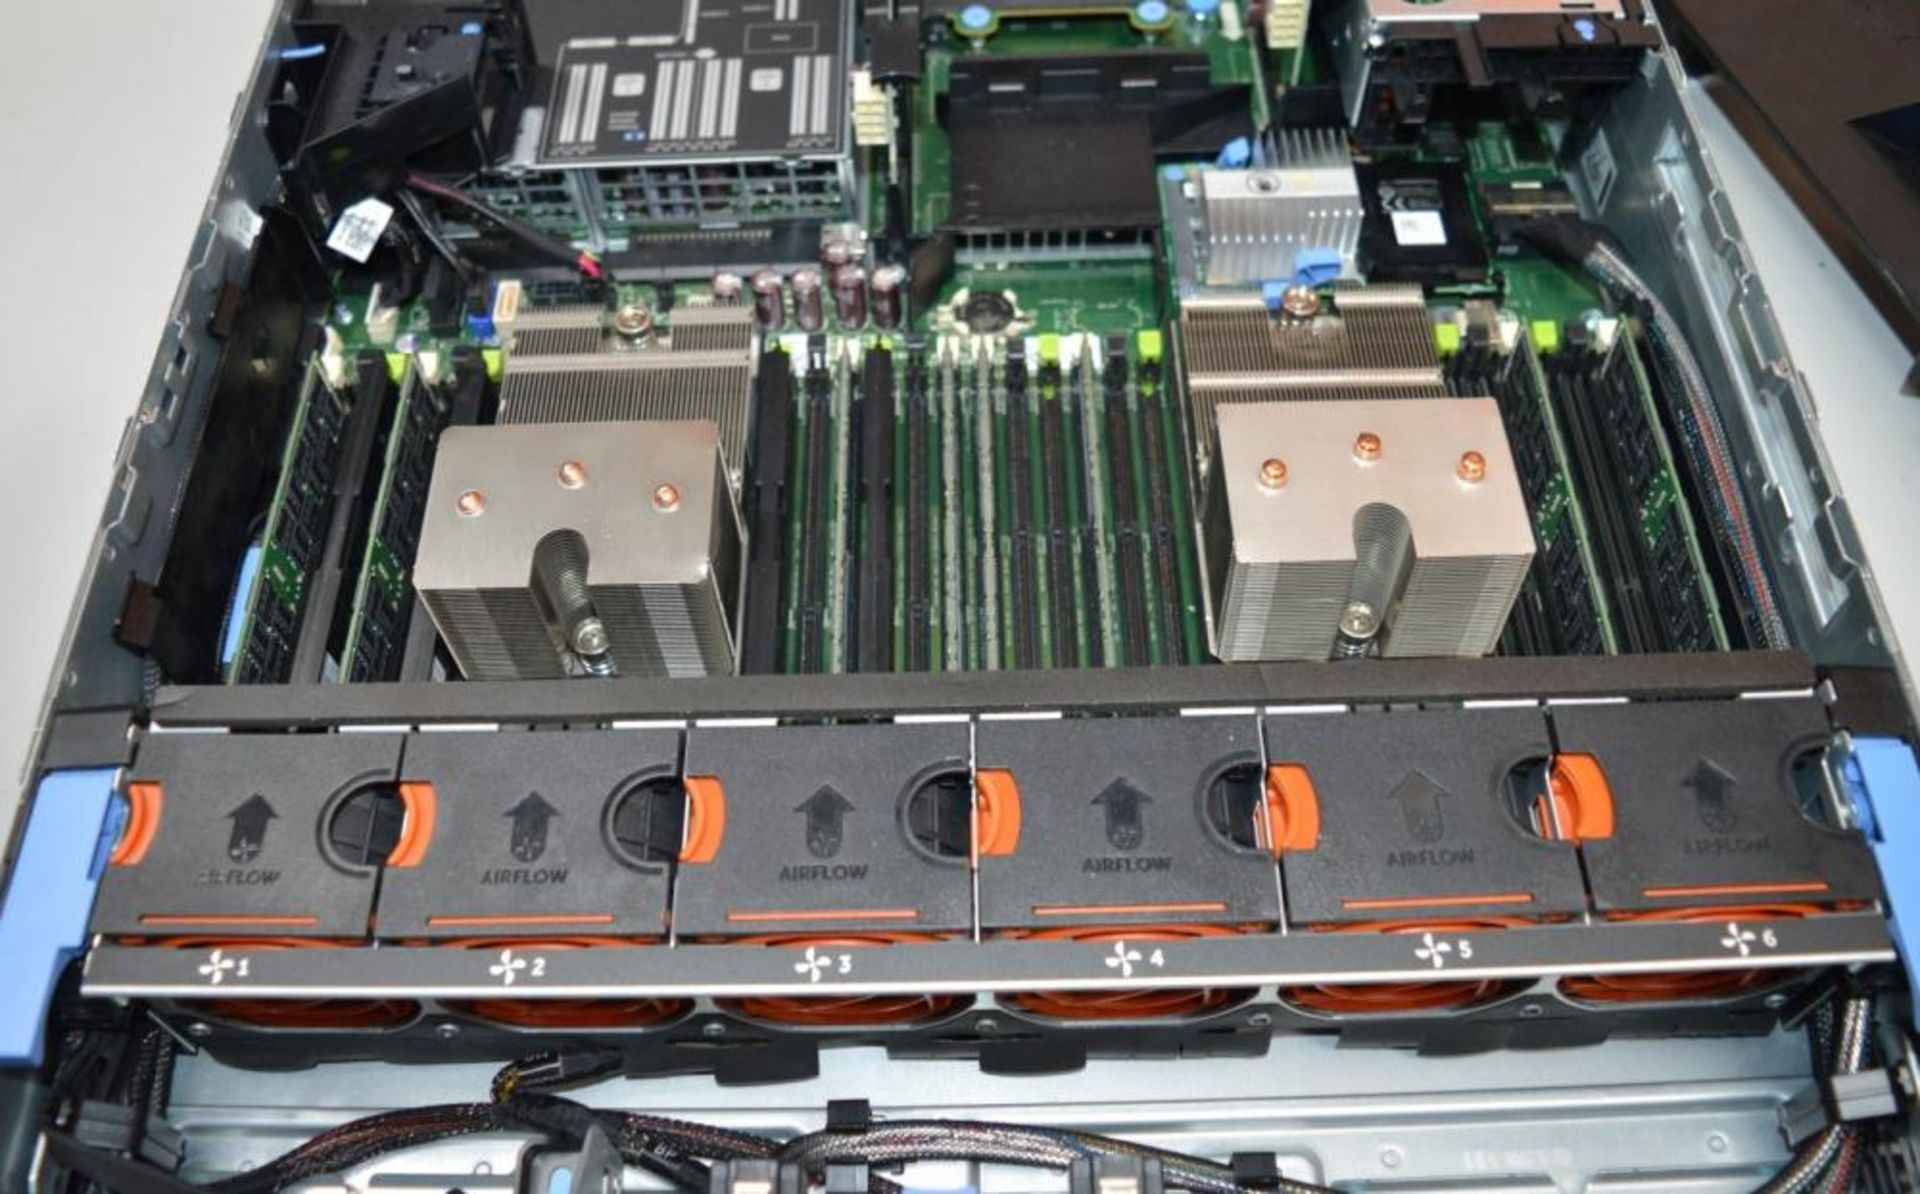 1 x Dell Power Edge R720 Rack Server - Features 2 x Intel Xeon E5-2630 Six Core CPU, 128gb DDR3 Ram - Bild 3 aus 6